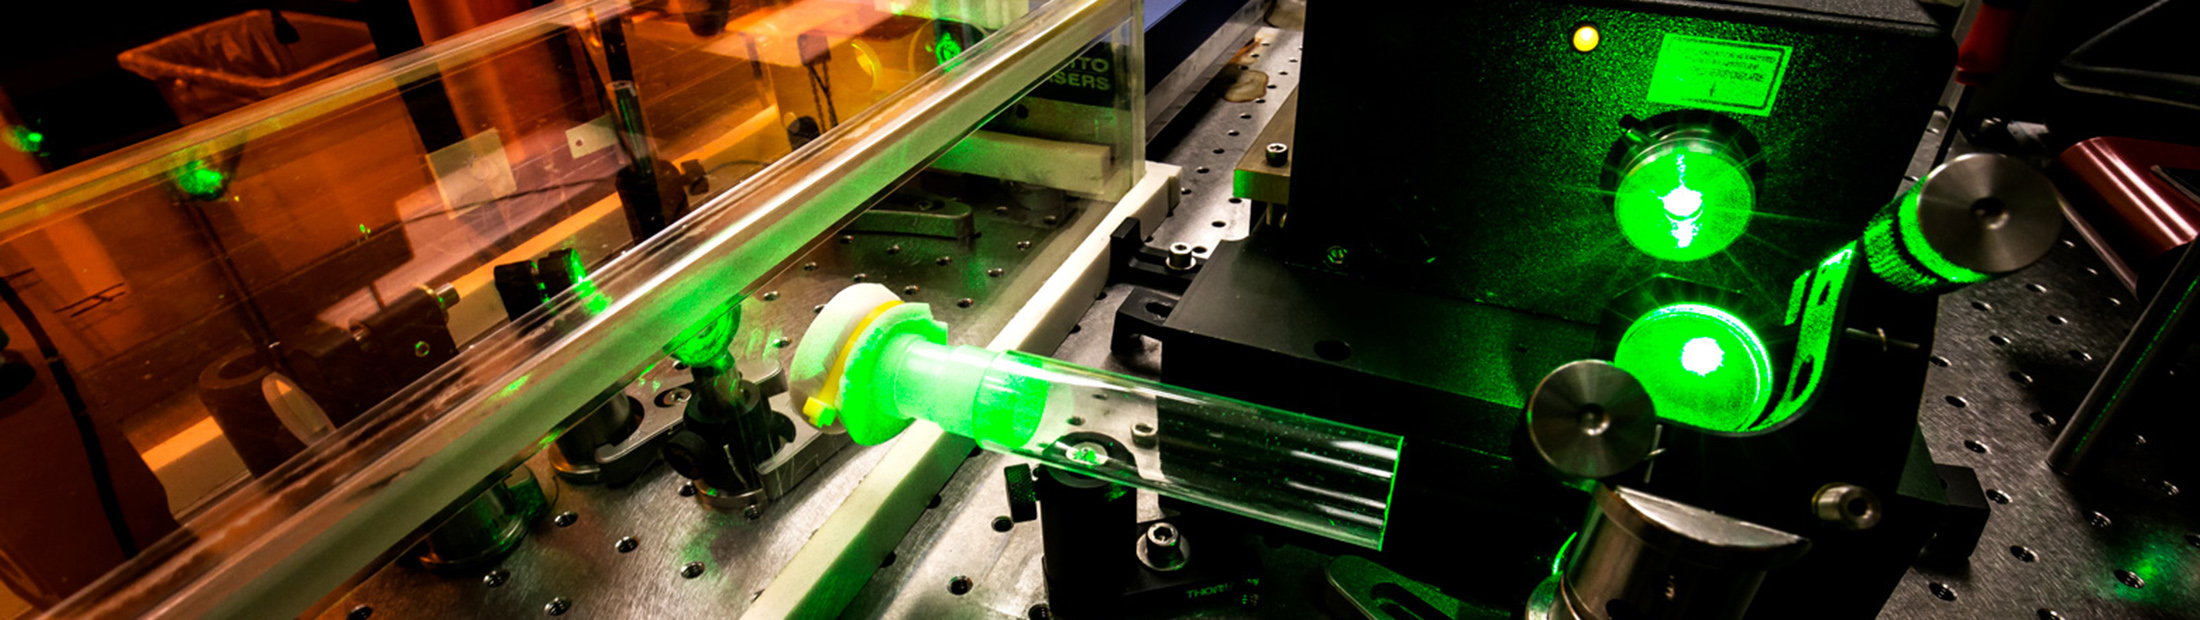 A large machine emitting a green laser.